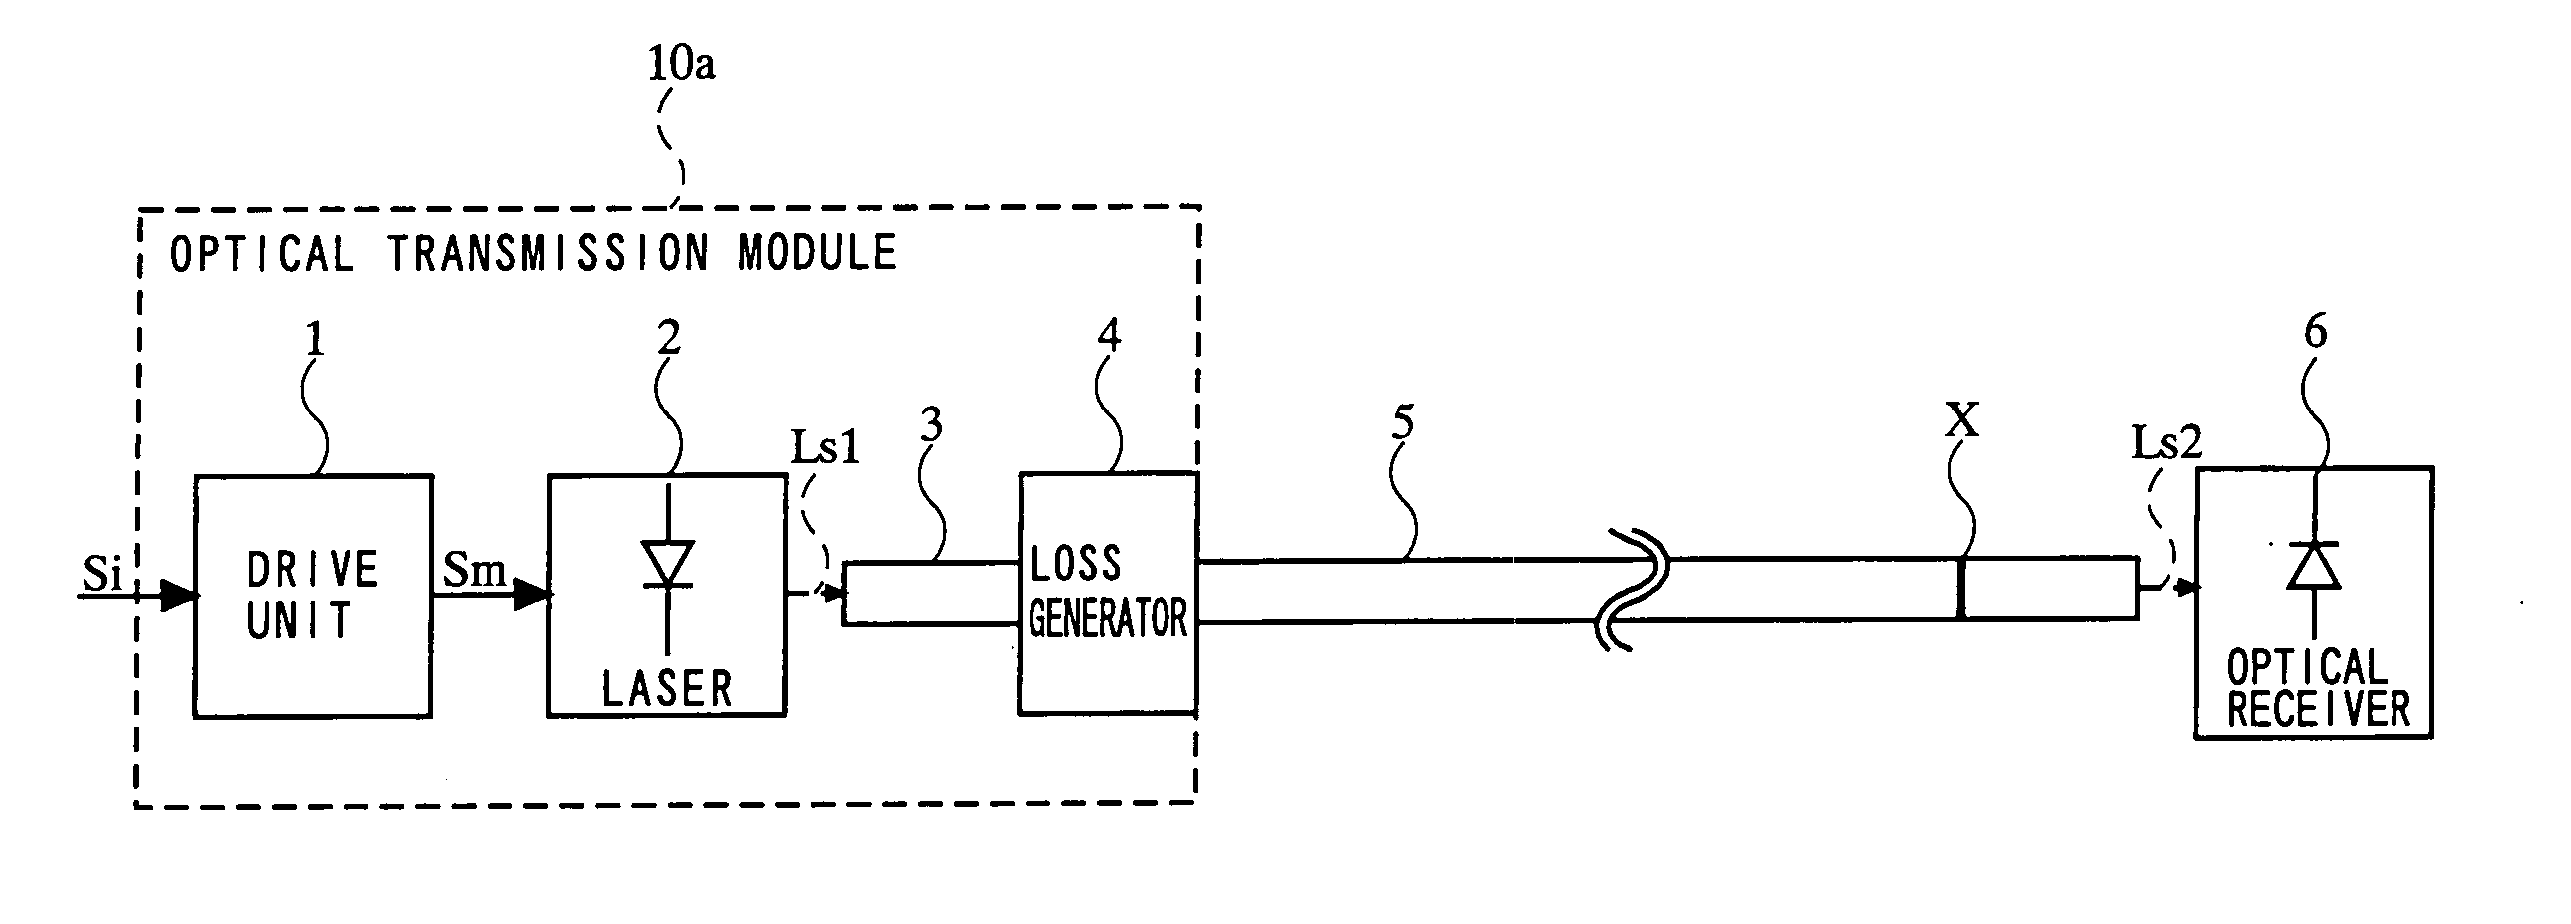 Optical transmission module